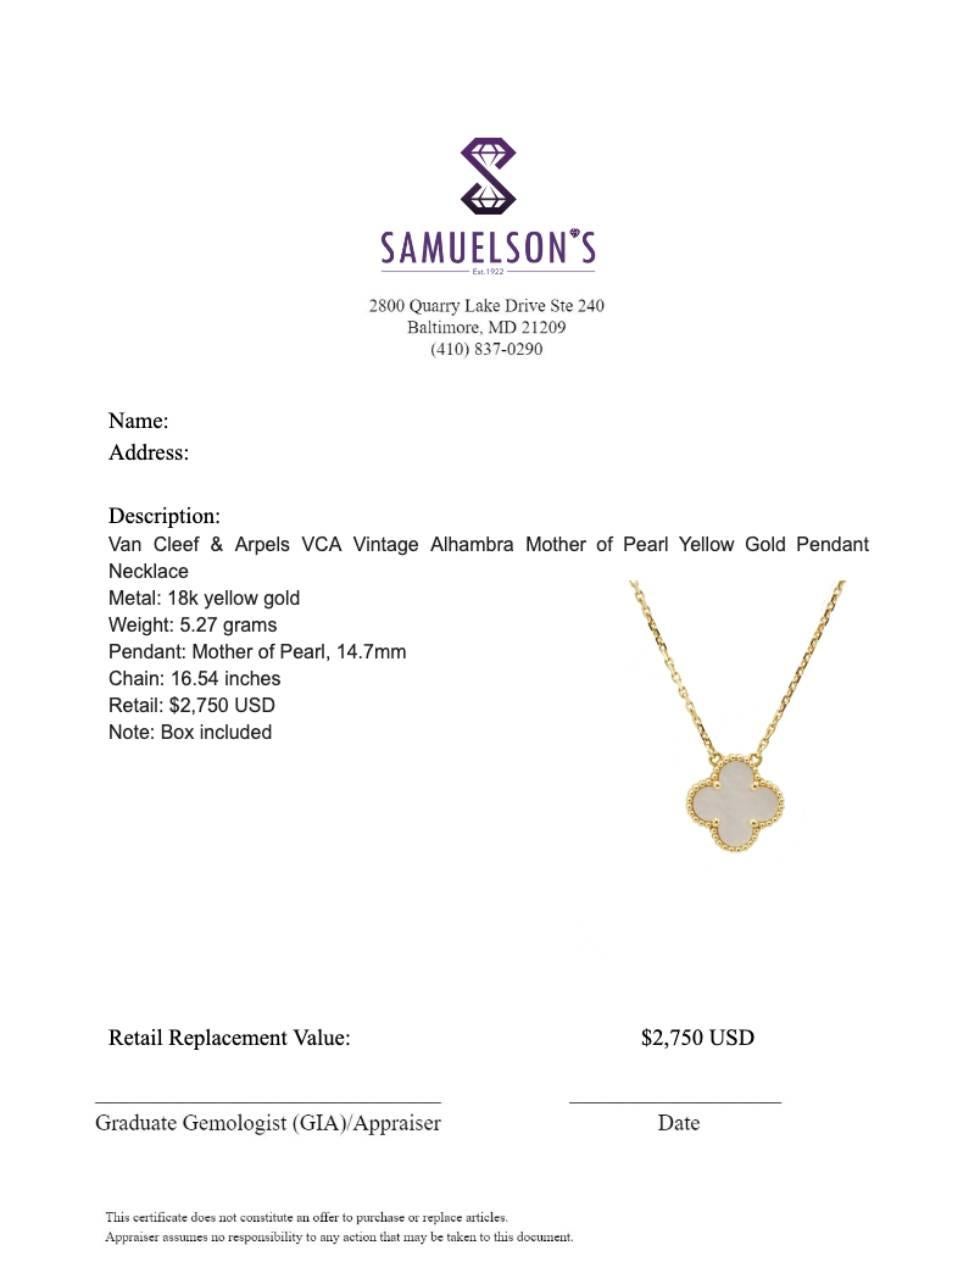 Van Cleef & Arpels VCA Vintage Alhambra Mother of Pearl Gold Pendant Necklace 1